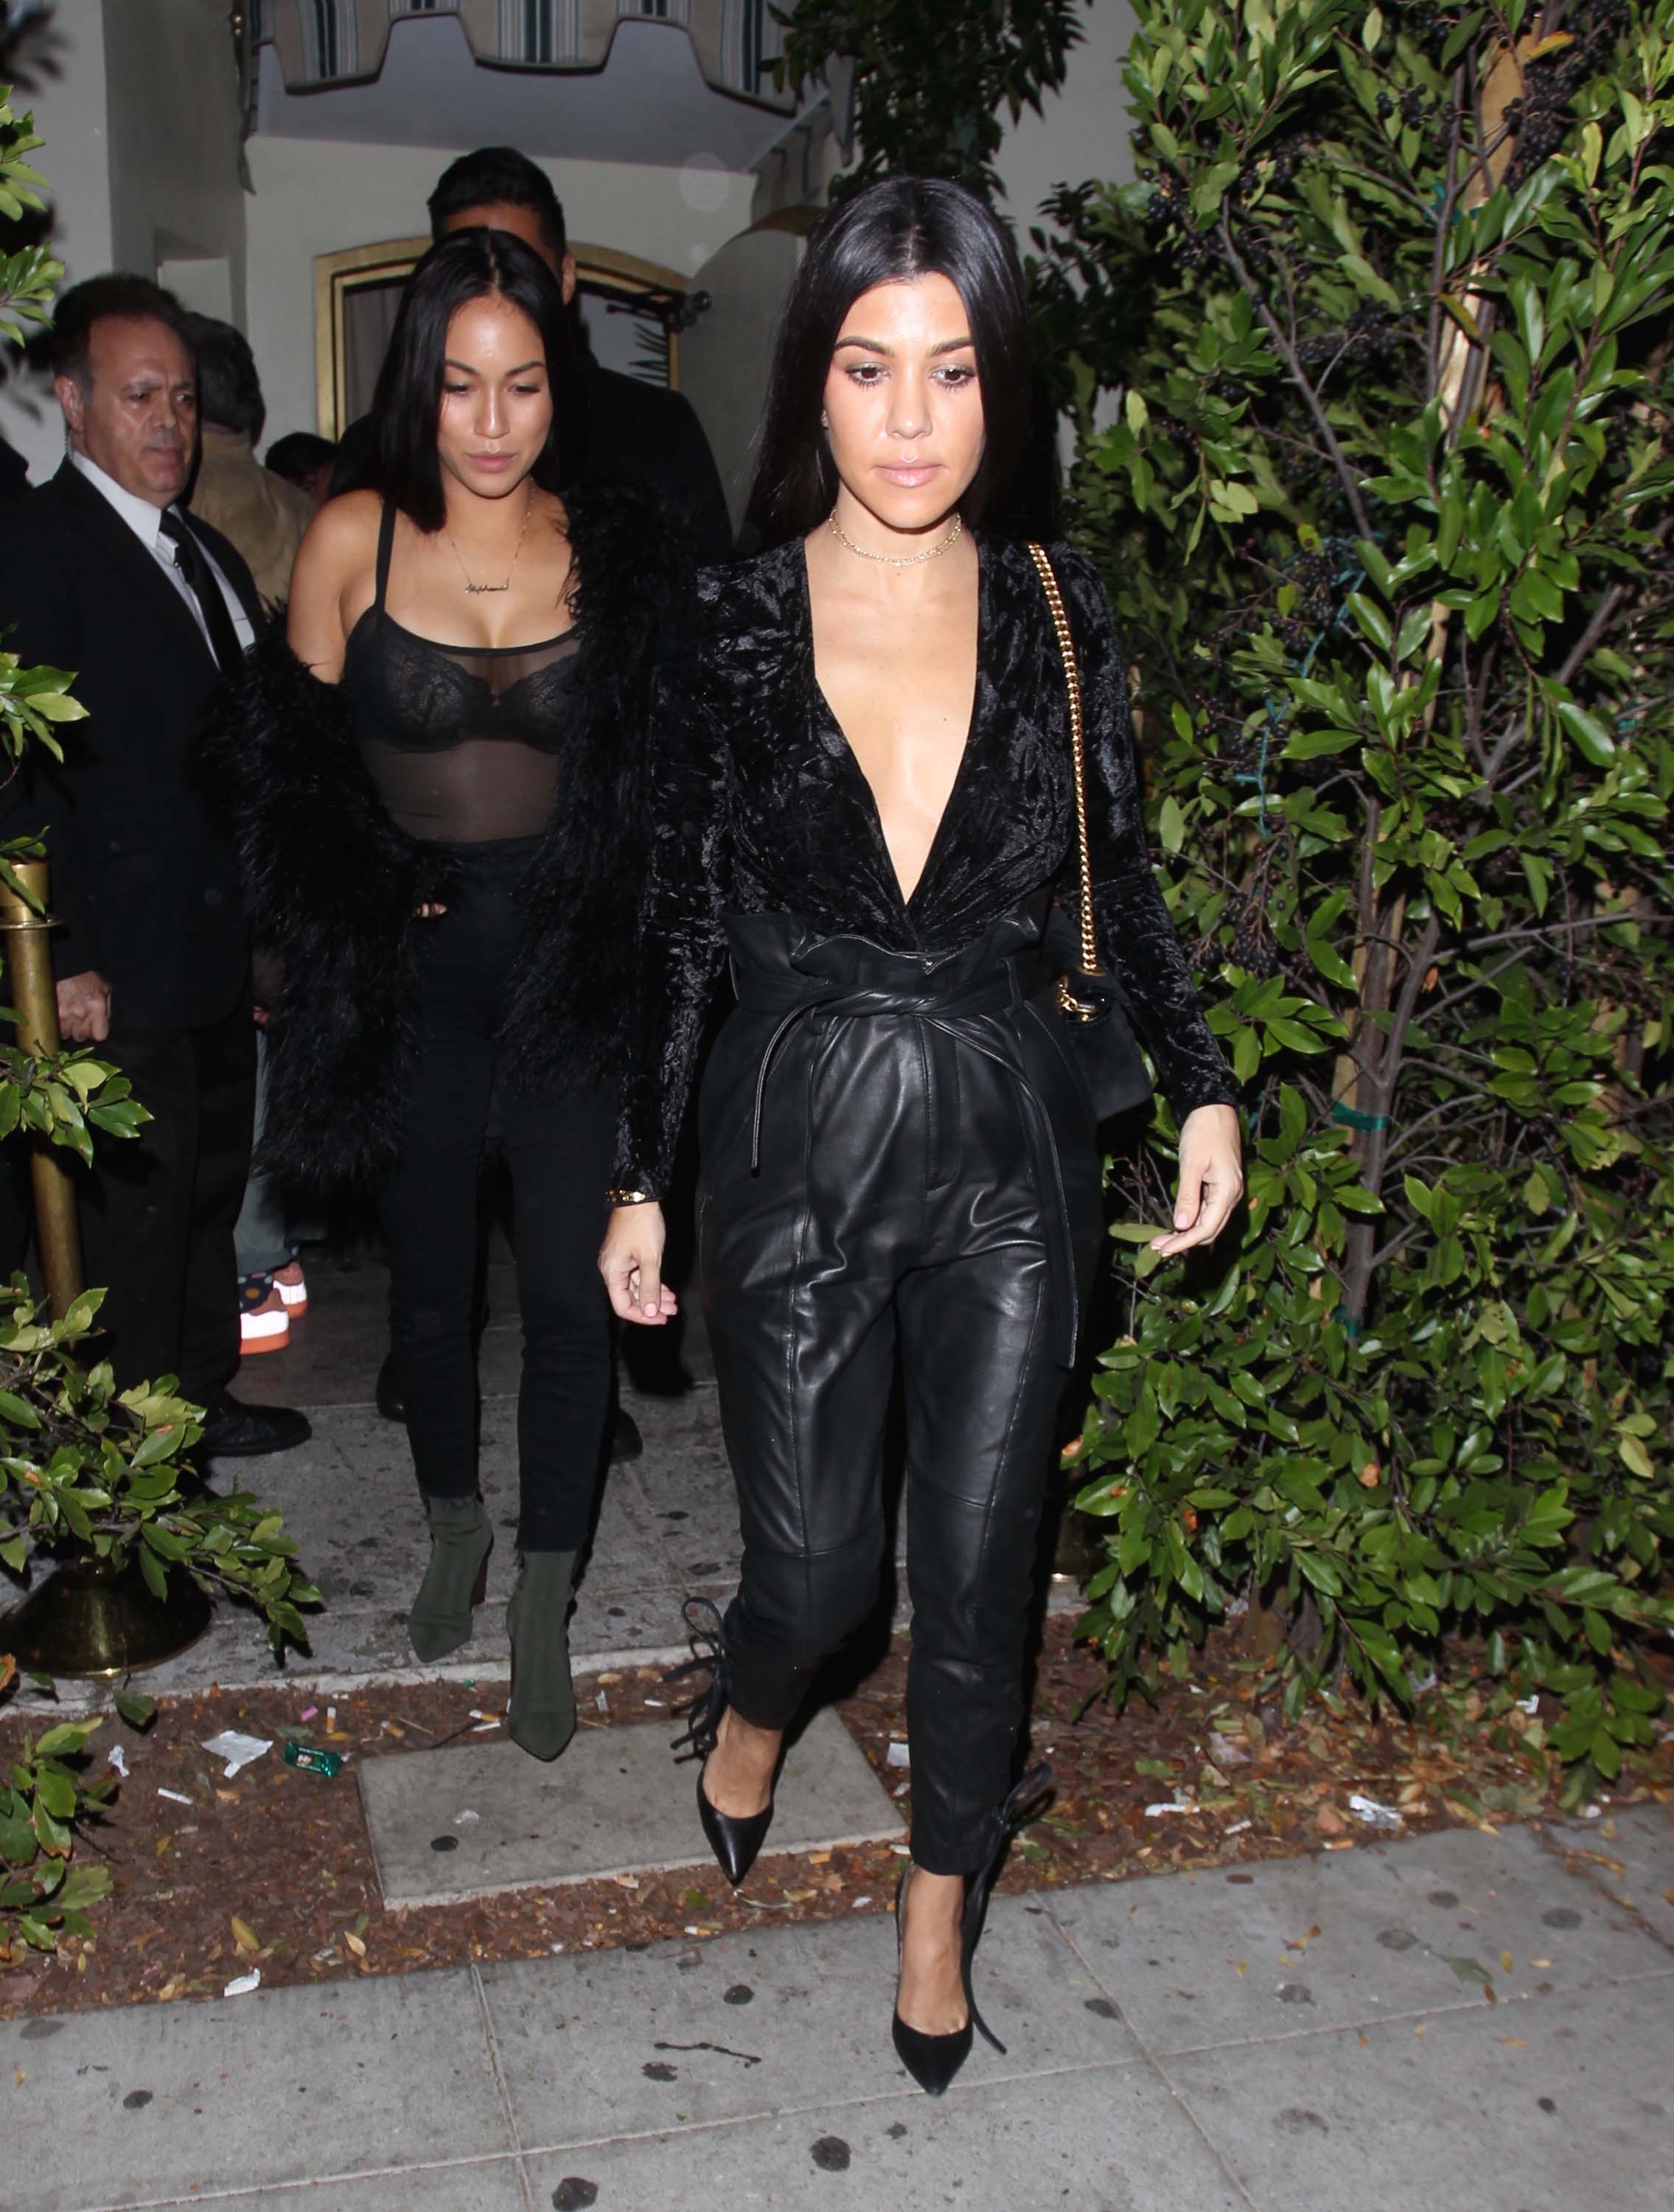 Kourtney Kardashian leaving the Delilah Lounge